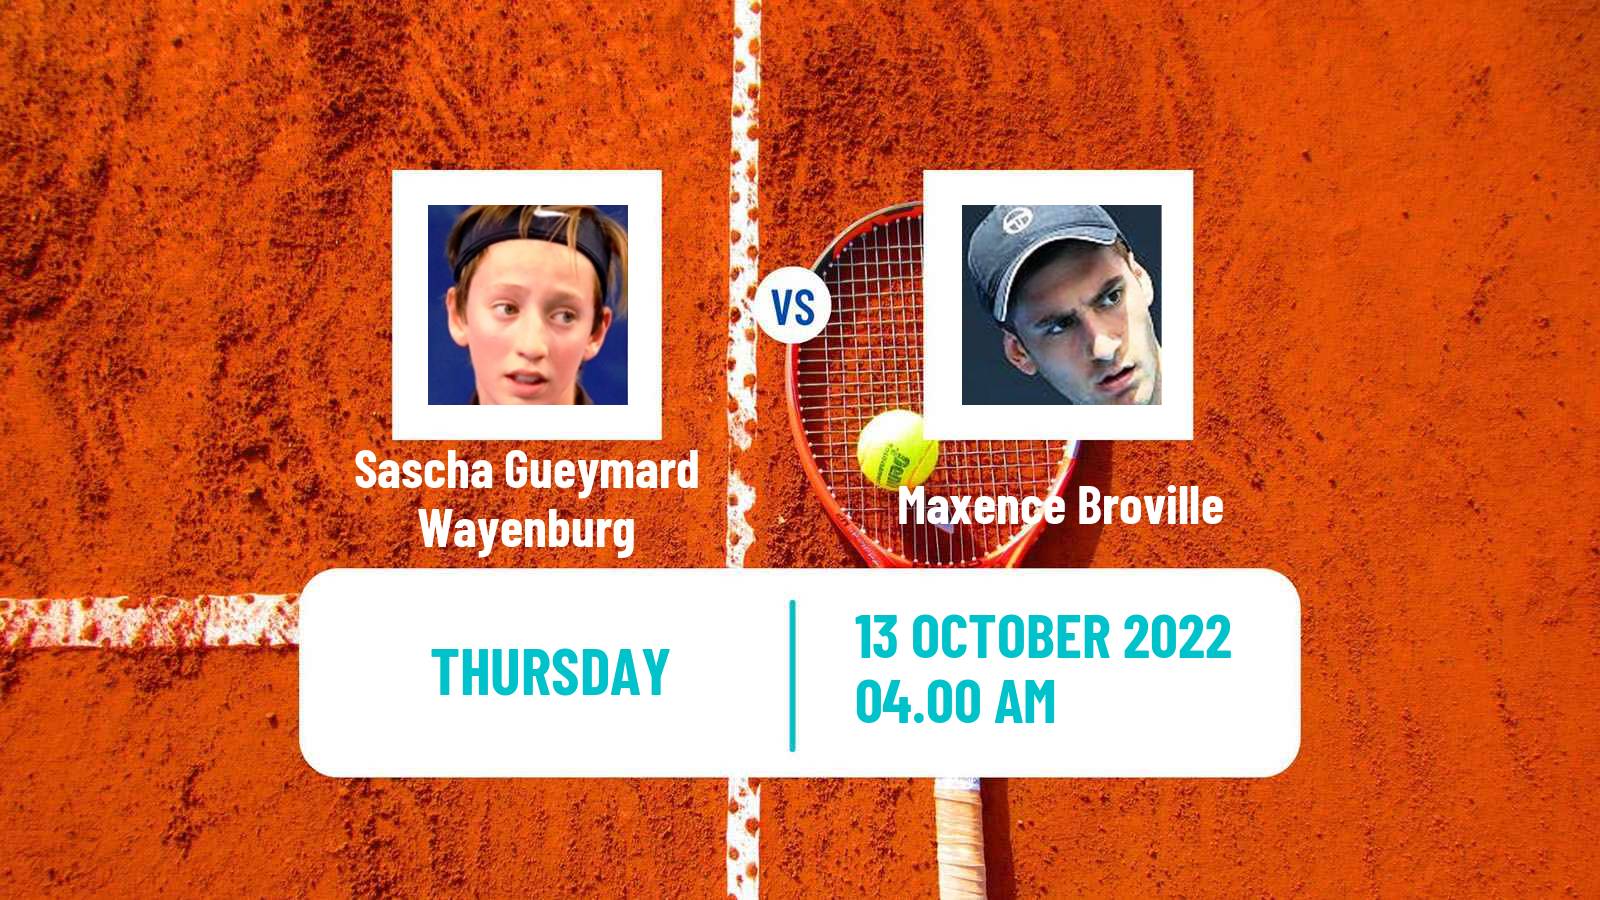 Tennis ITF Tournaments Sascha Gueymard Wayenburg - Maxence Broville